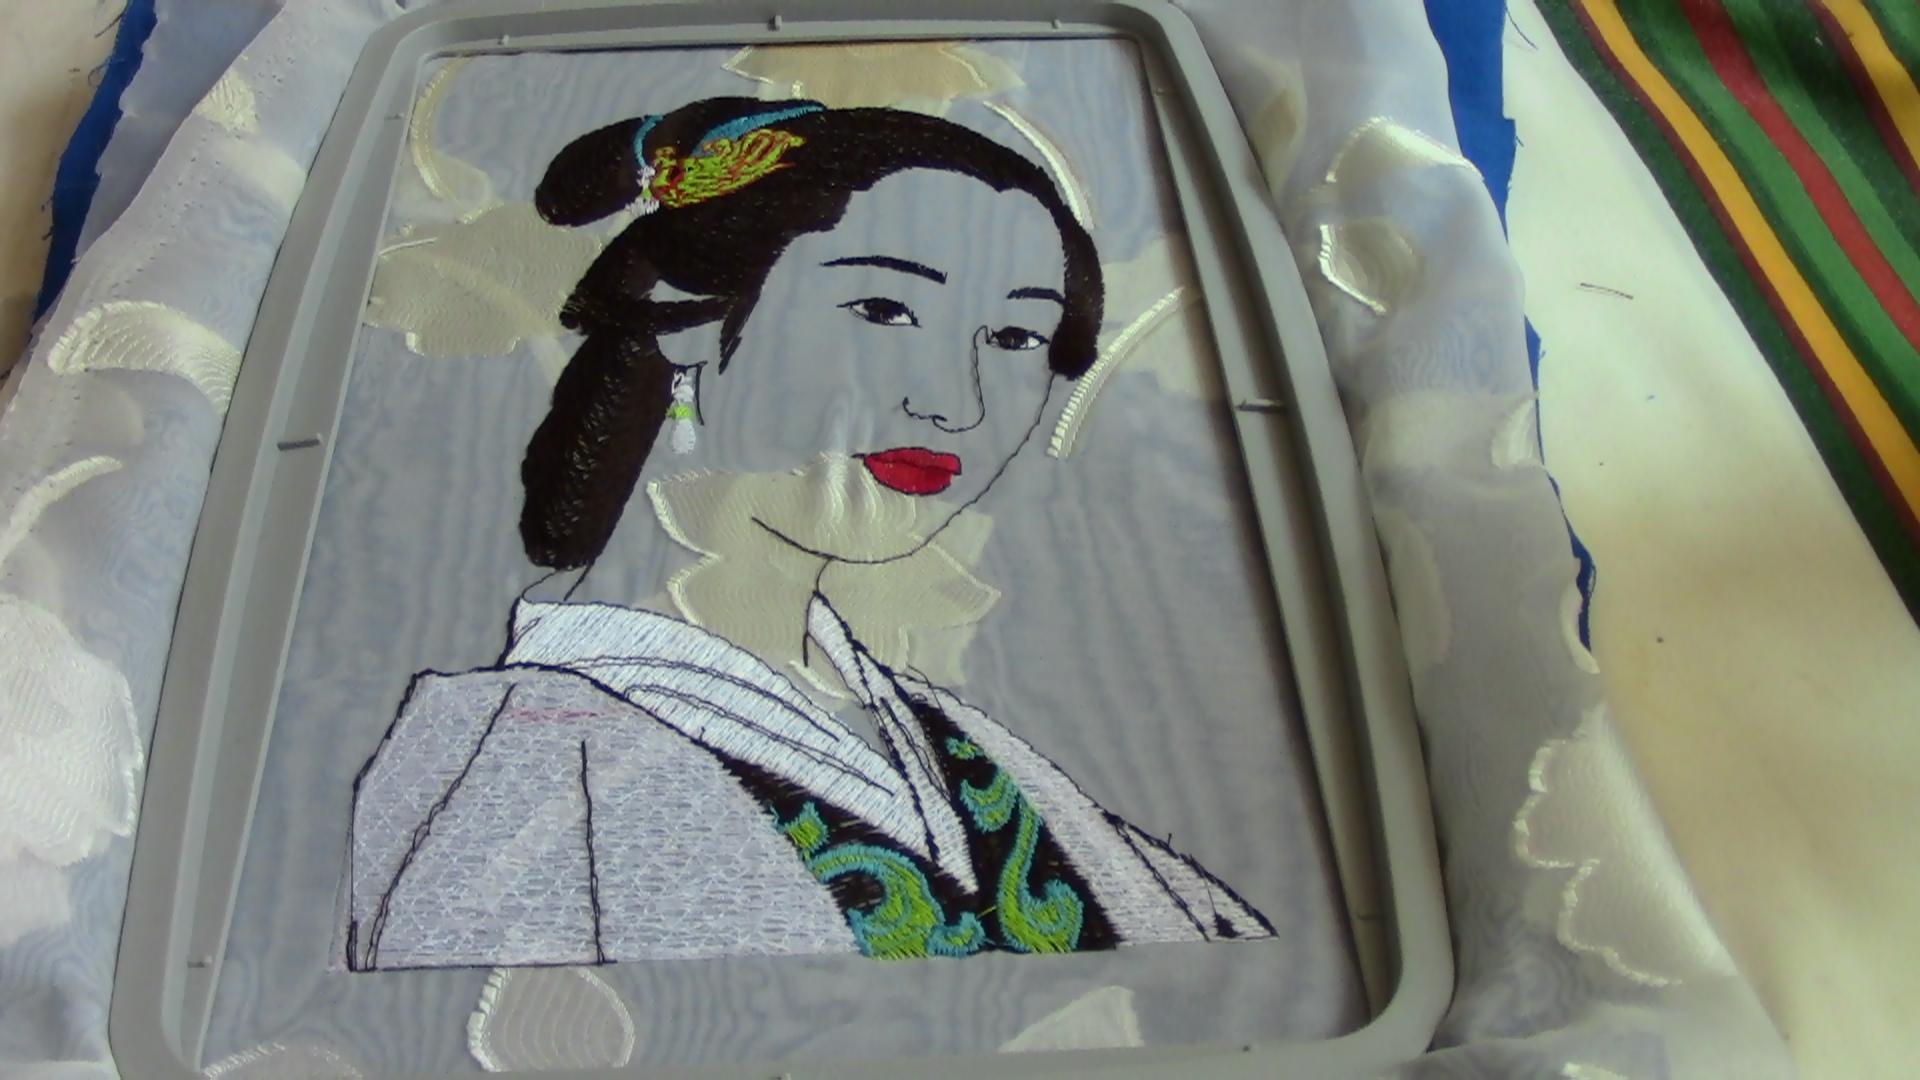 In hoop geisha free embroidery design